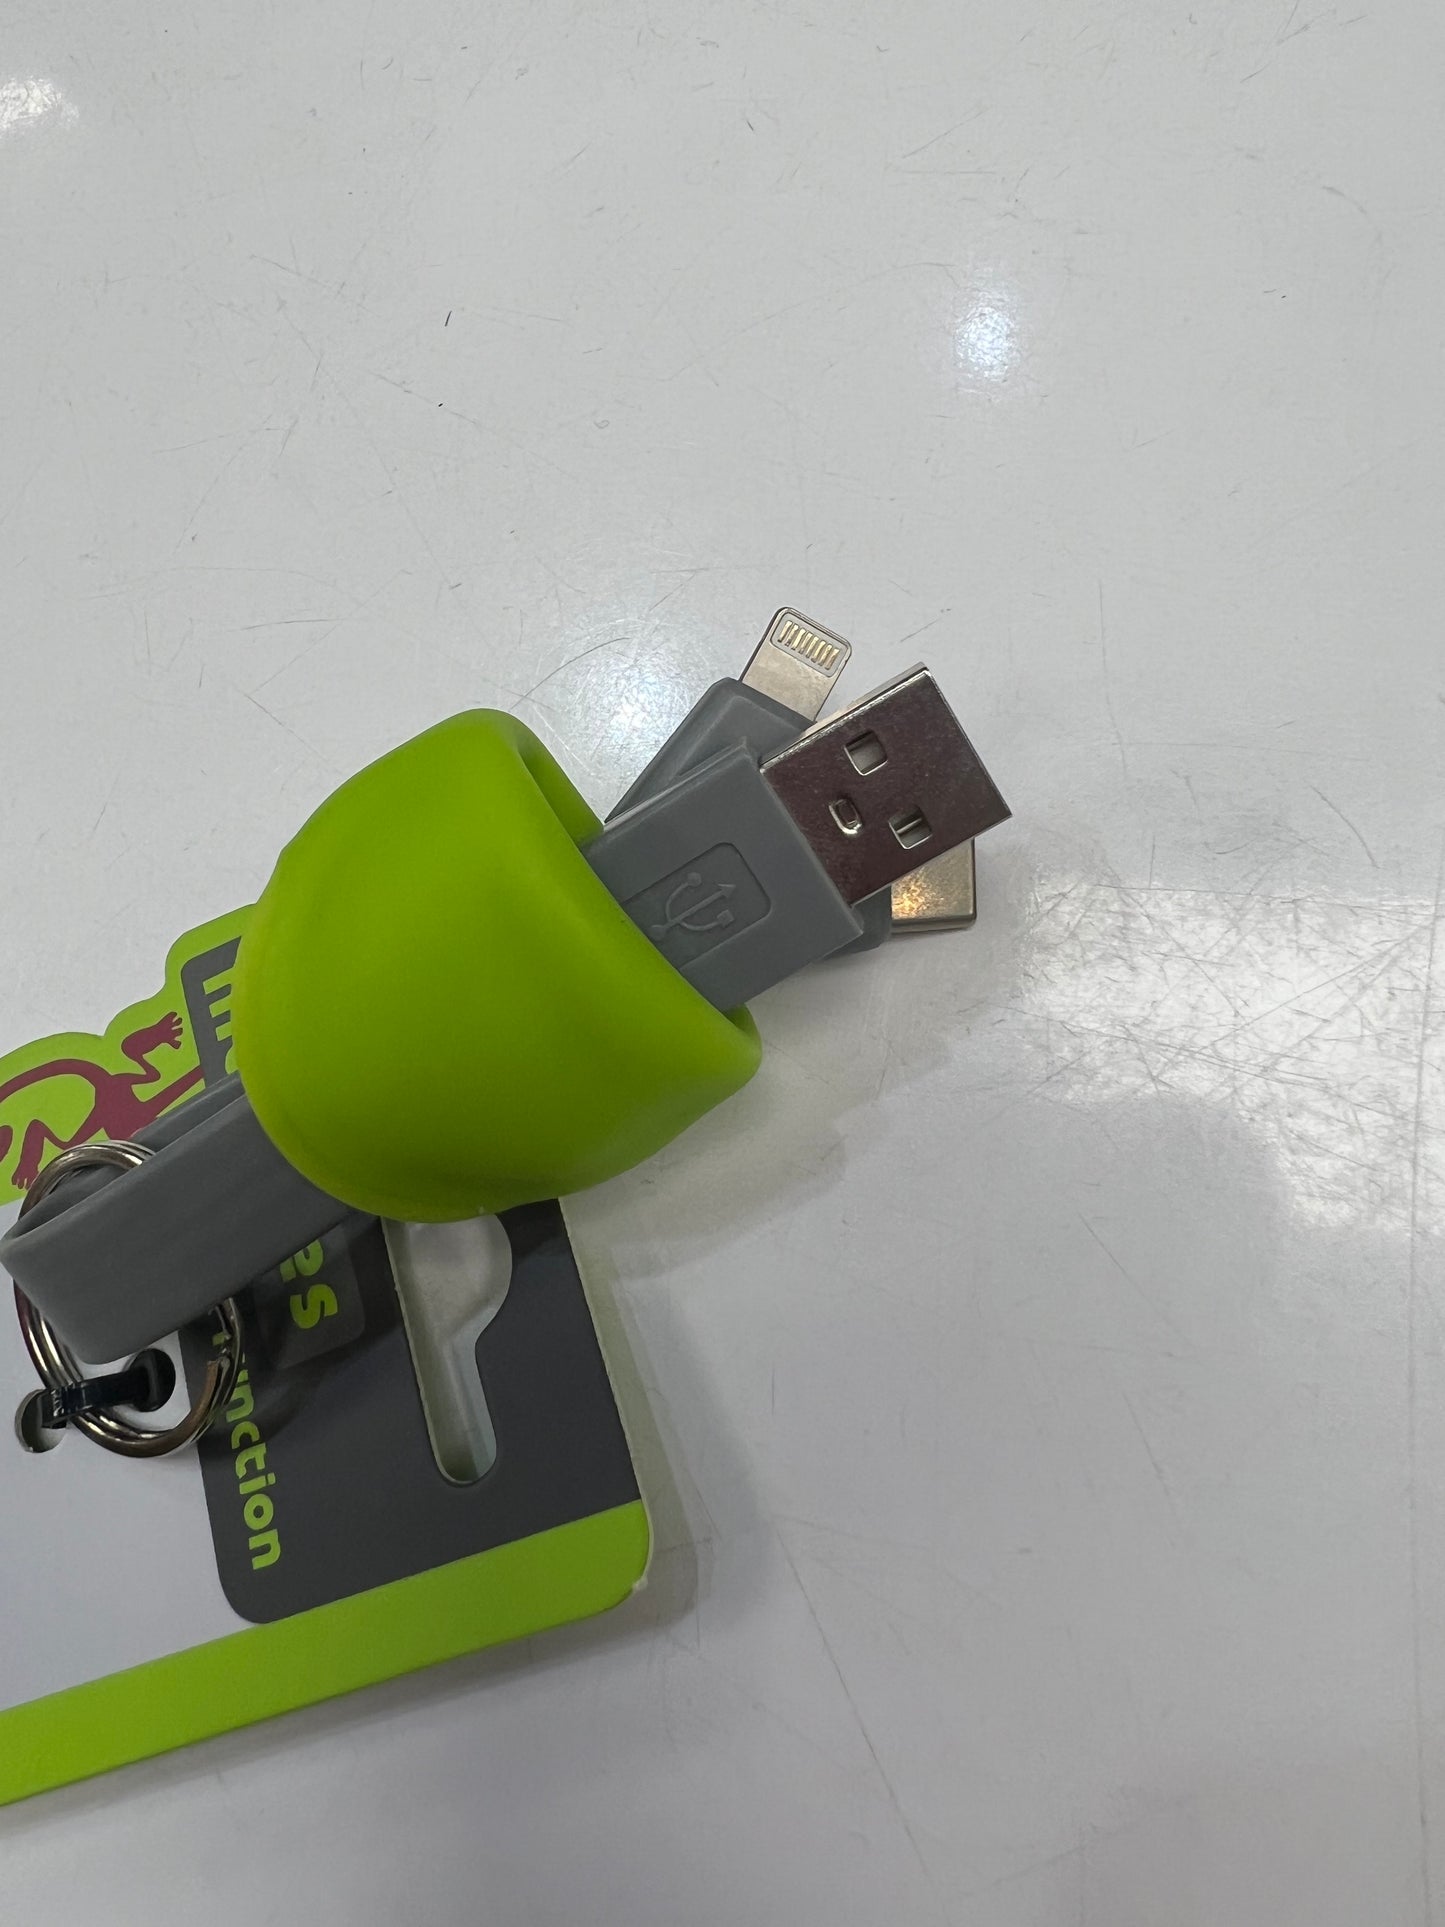 On Sale- Munkees Ace Camp Lightning USB C Keychain